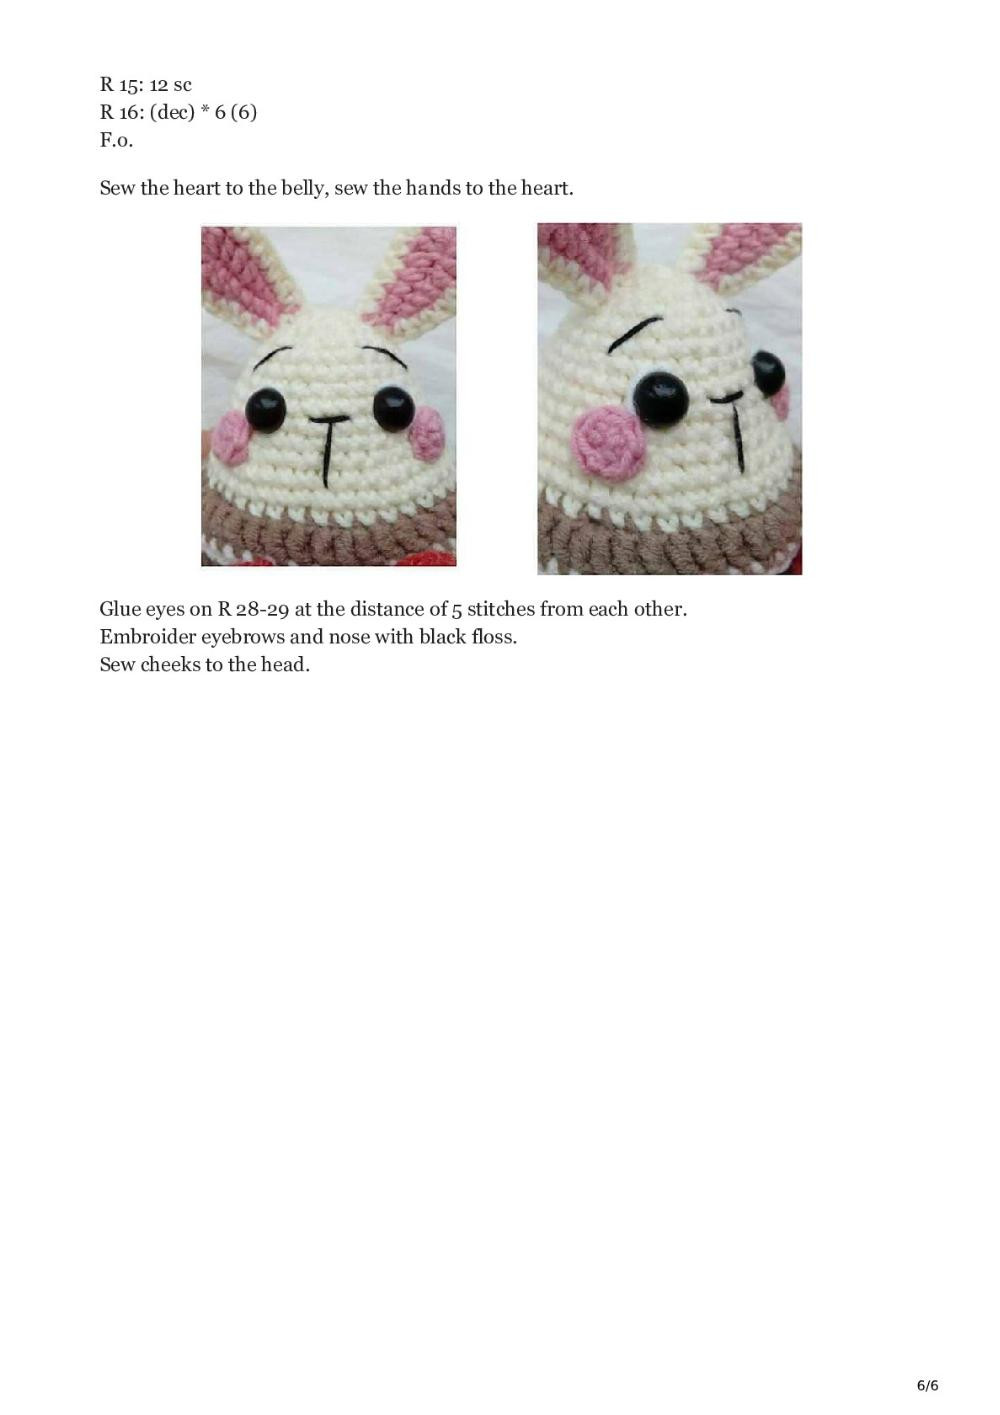 Crochet mini bunny with a heart